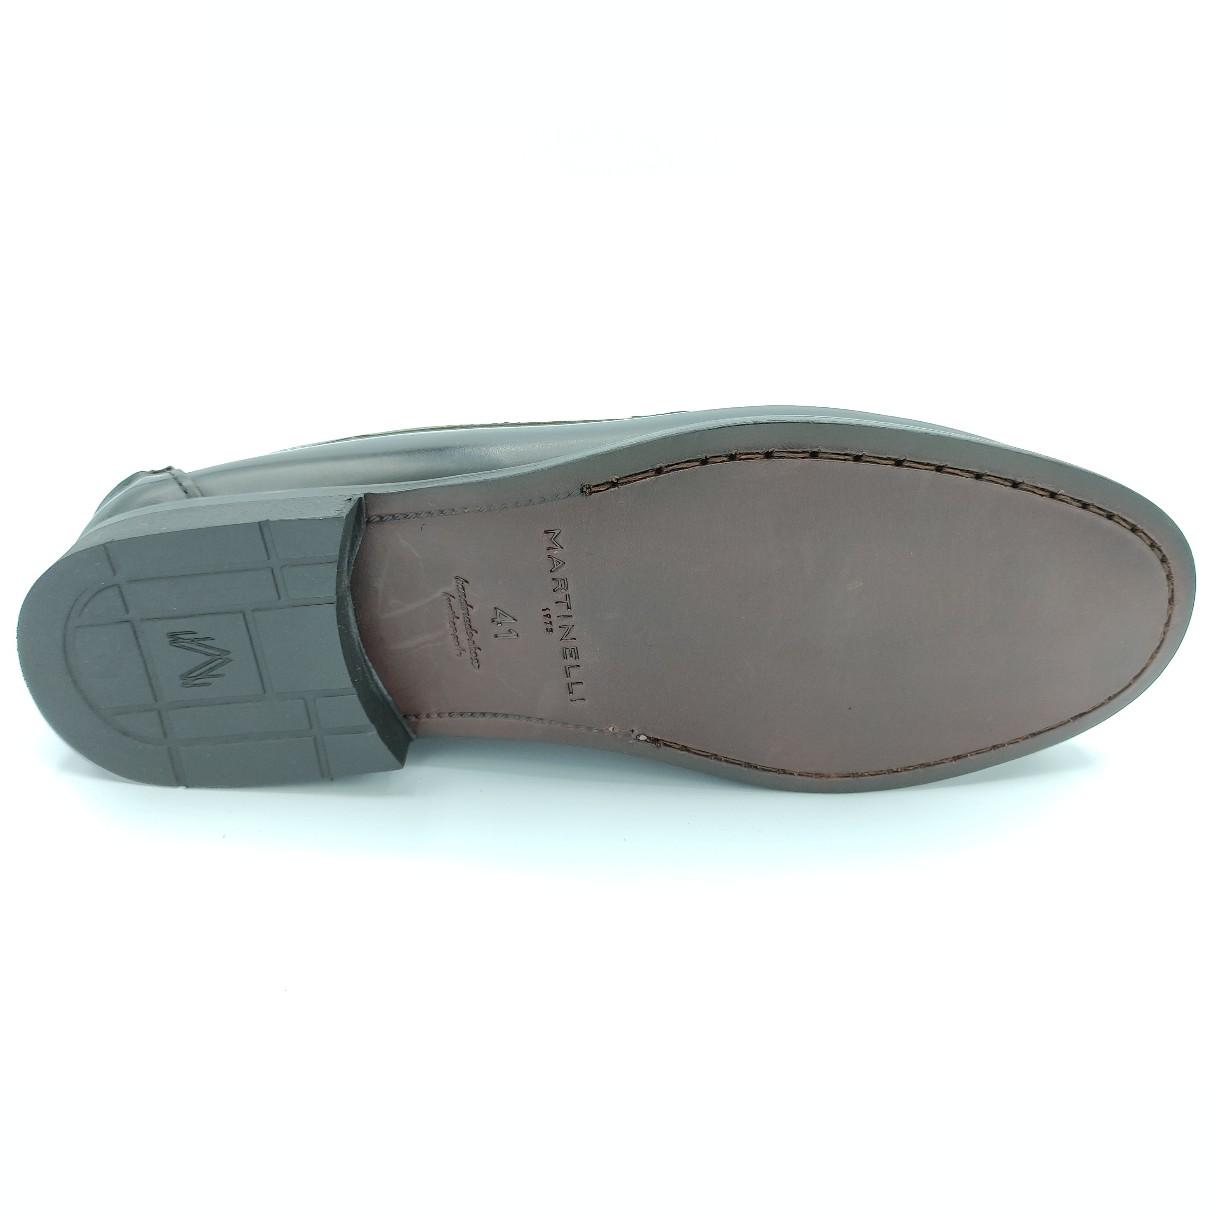 Zapato castellano negro de Martinelli - Calzados Ardura